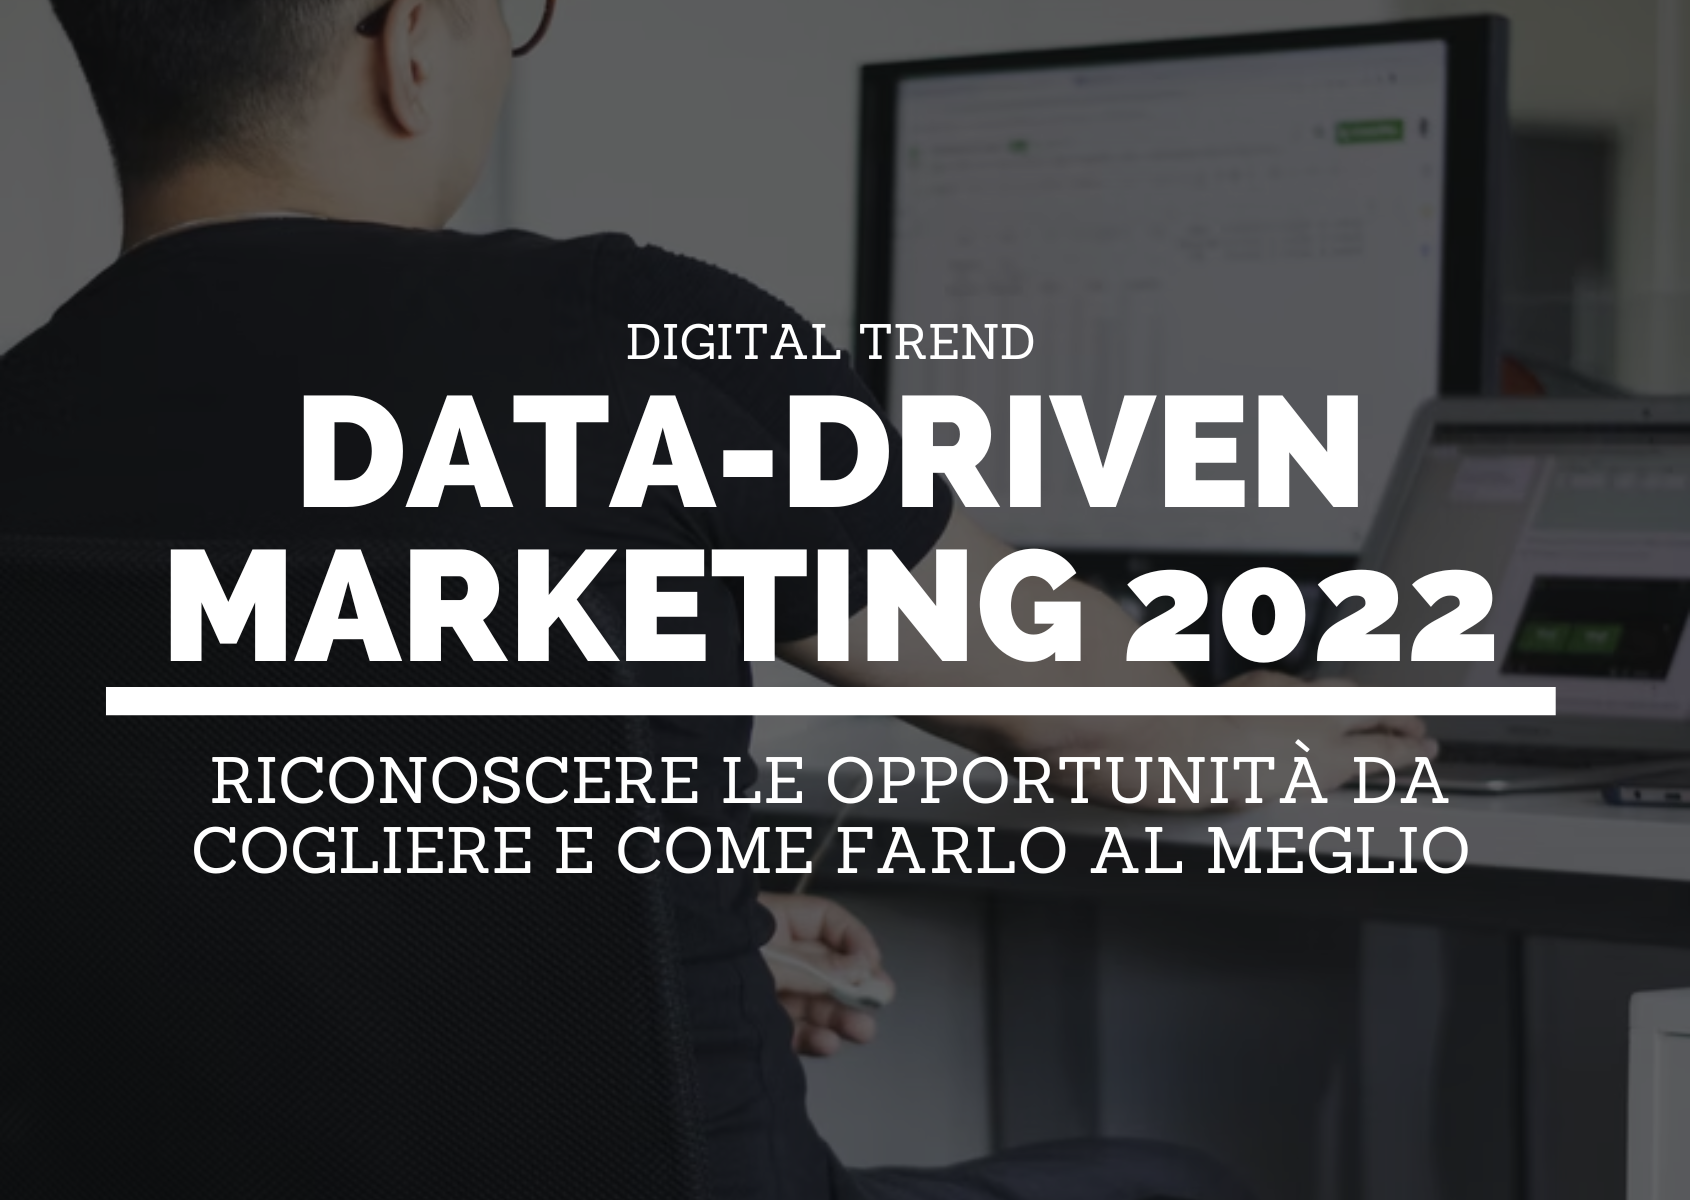 Data-driven-marketing-2022-header